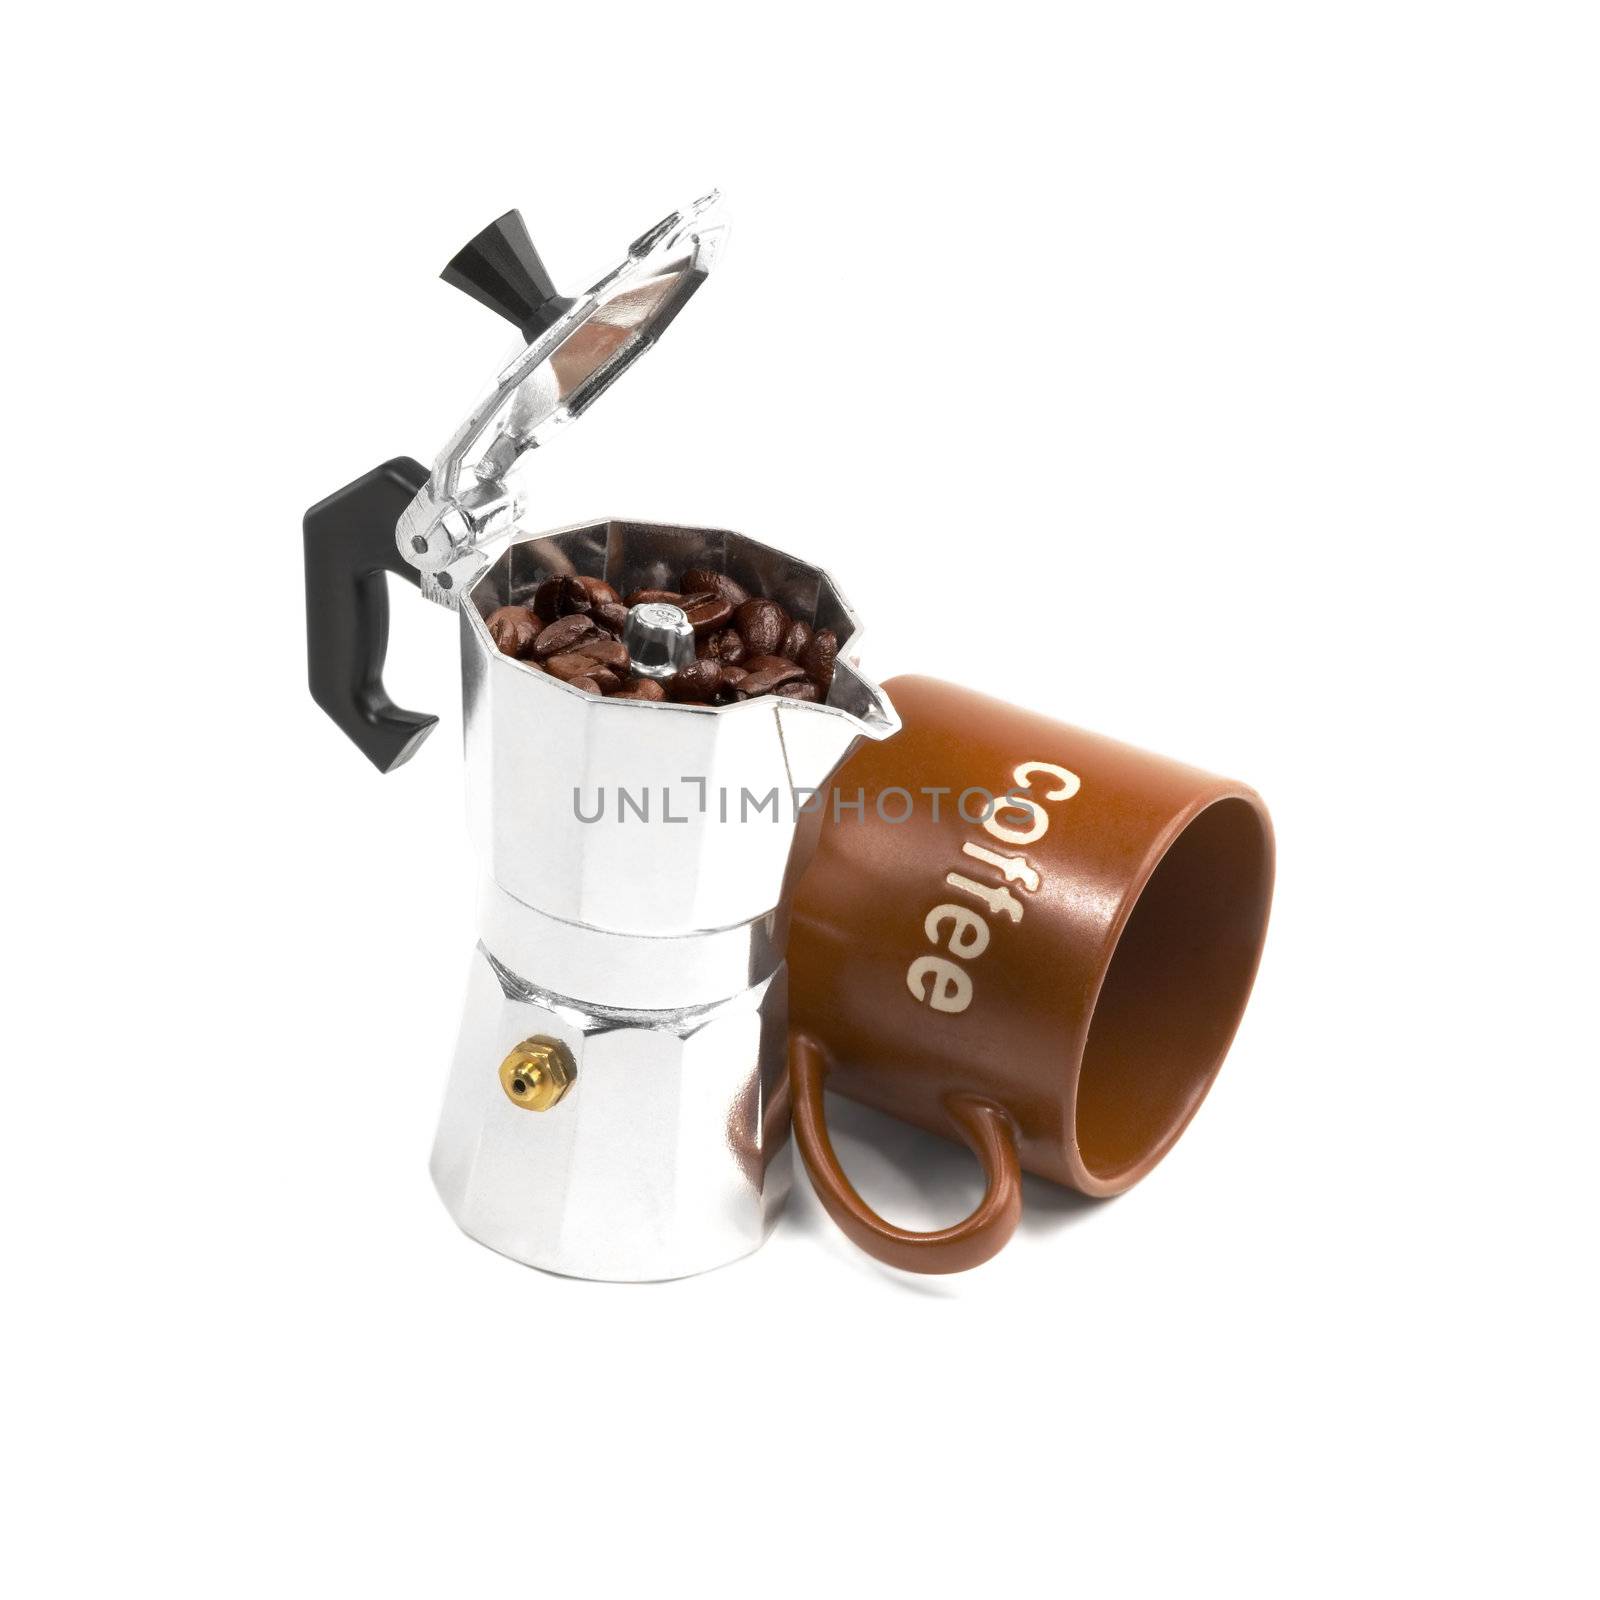 mocha coffee machine and cup by keko64